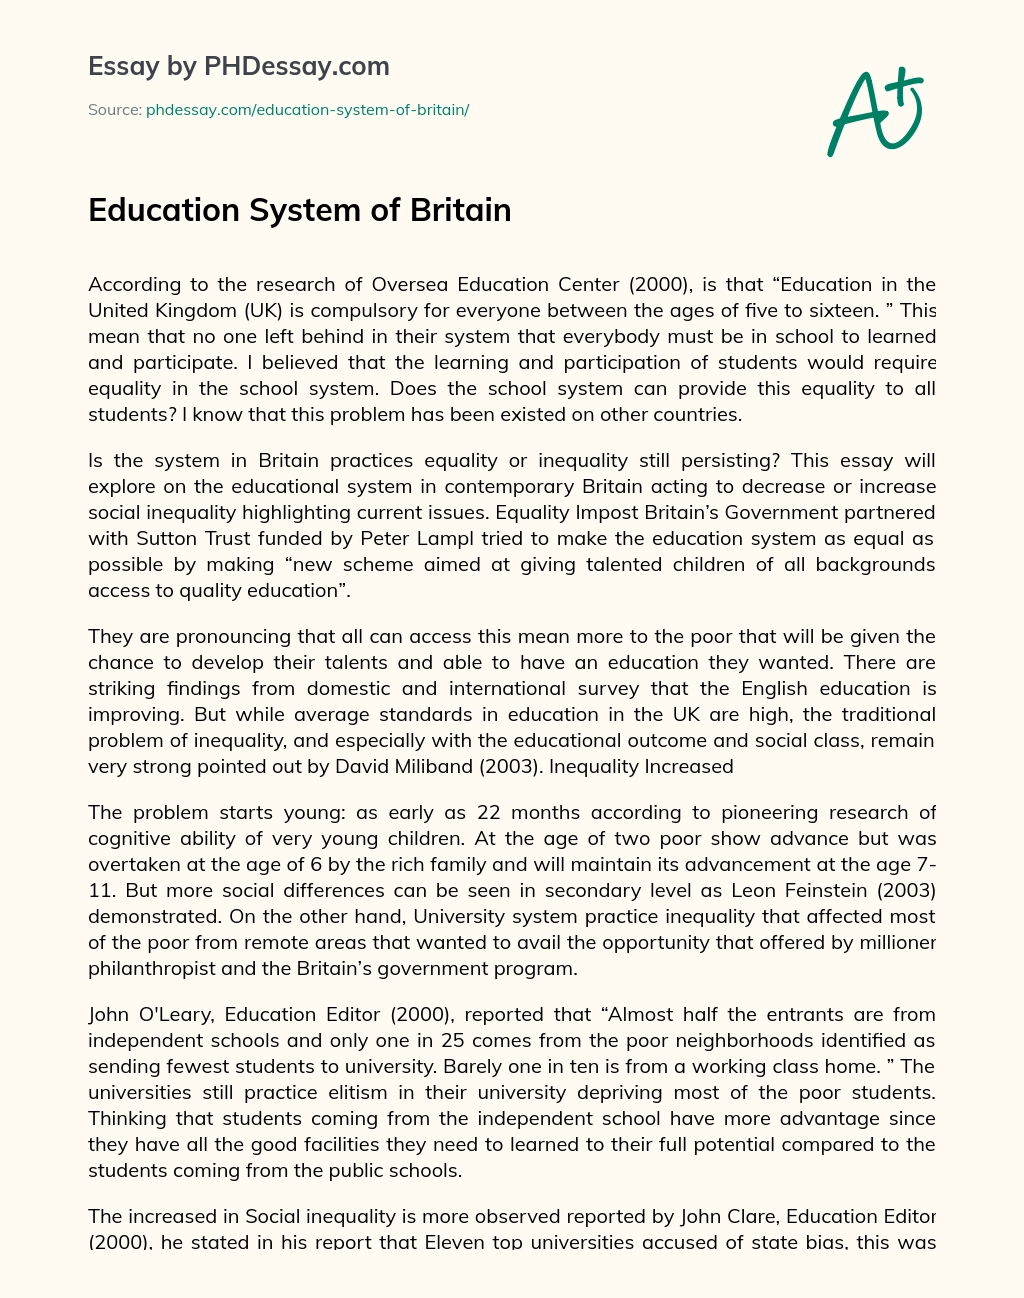 Education System of Britain essay